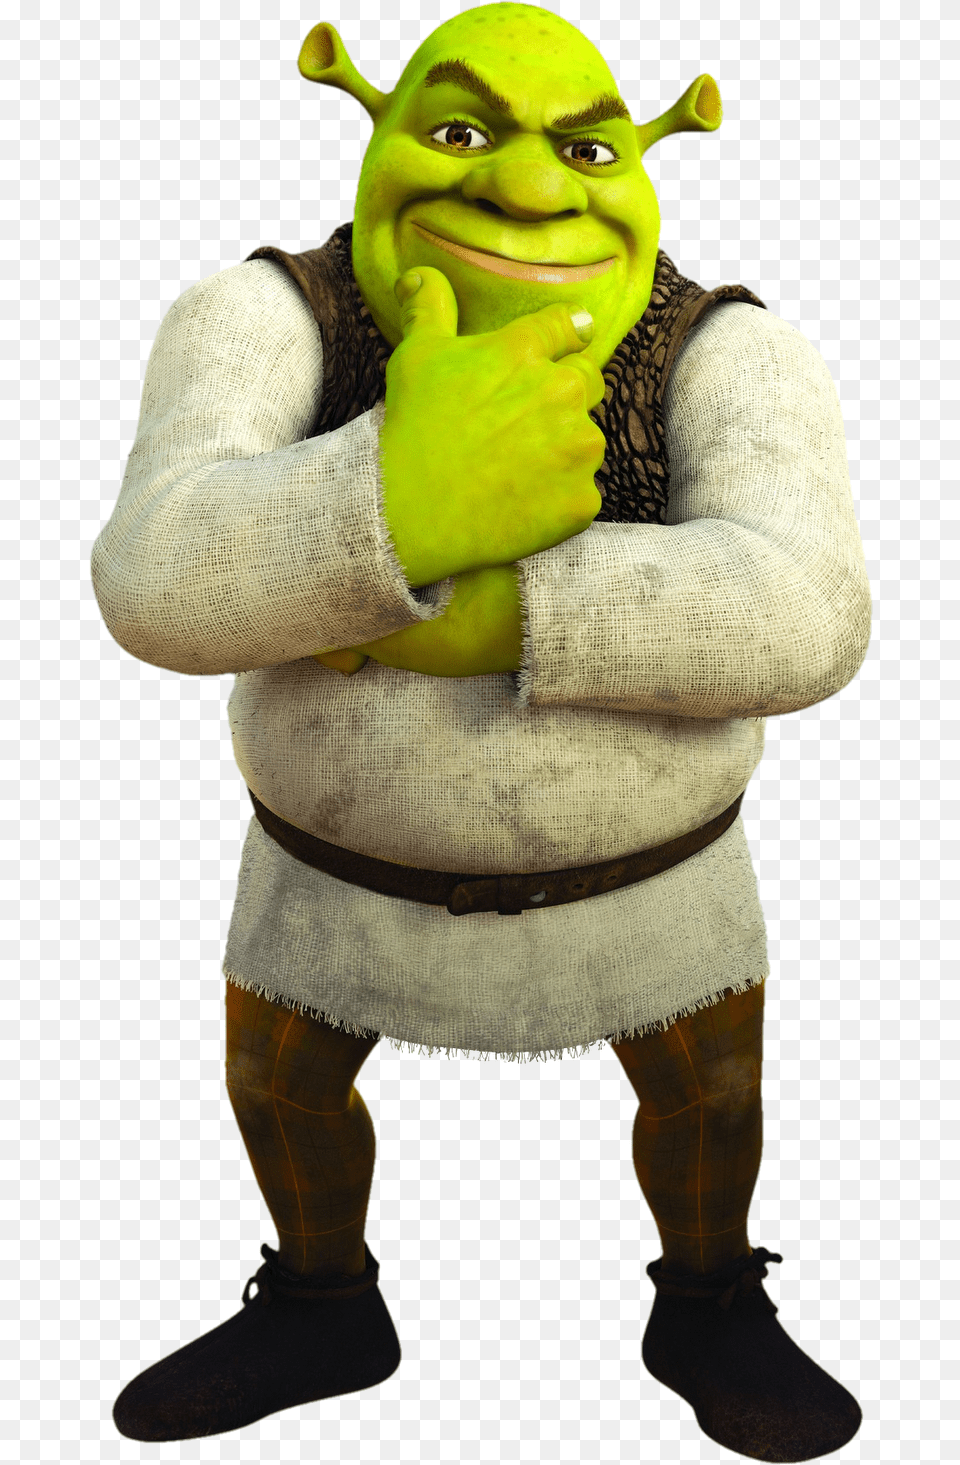 Download Shrek Thinking Image For Free Transparent Background Shrek, Body Part, Finger, Hand, Person Png